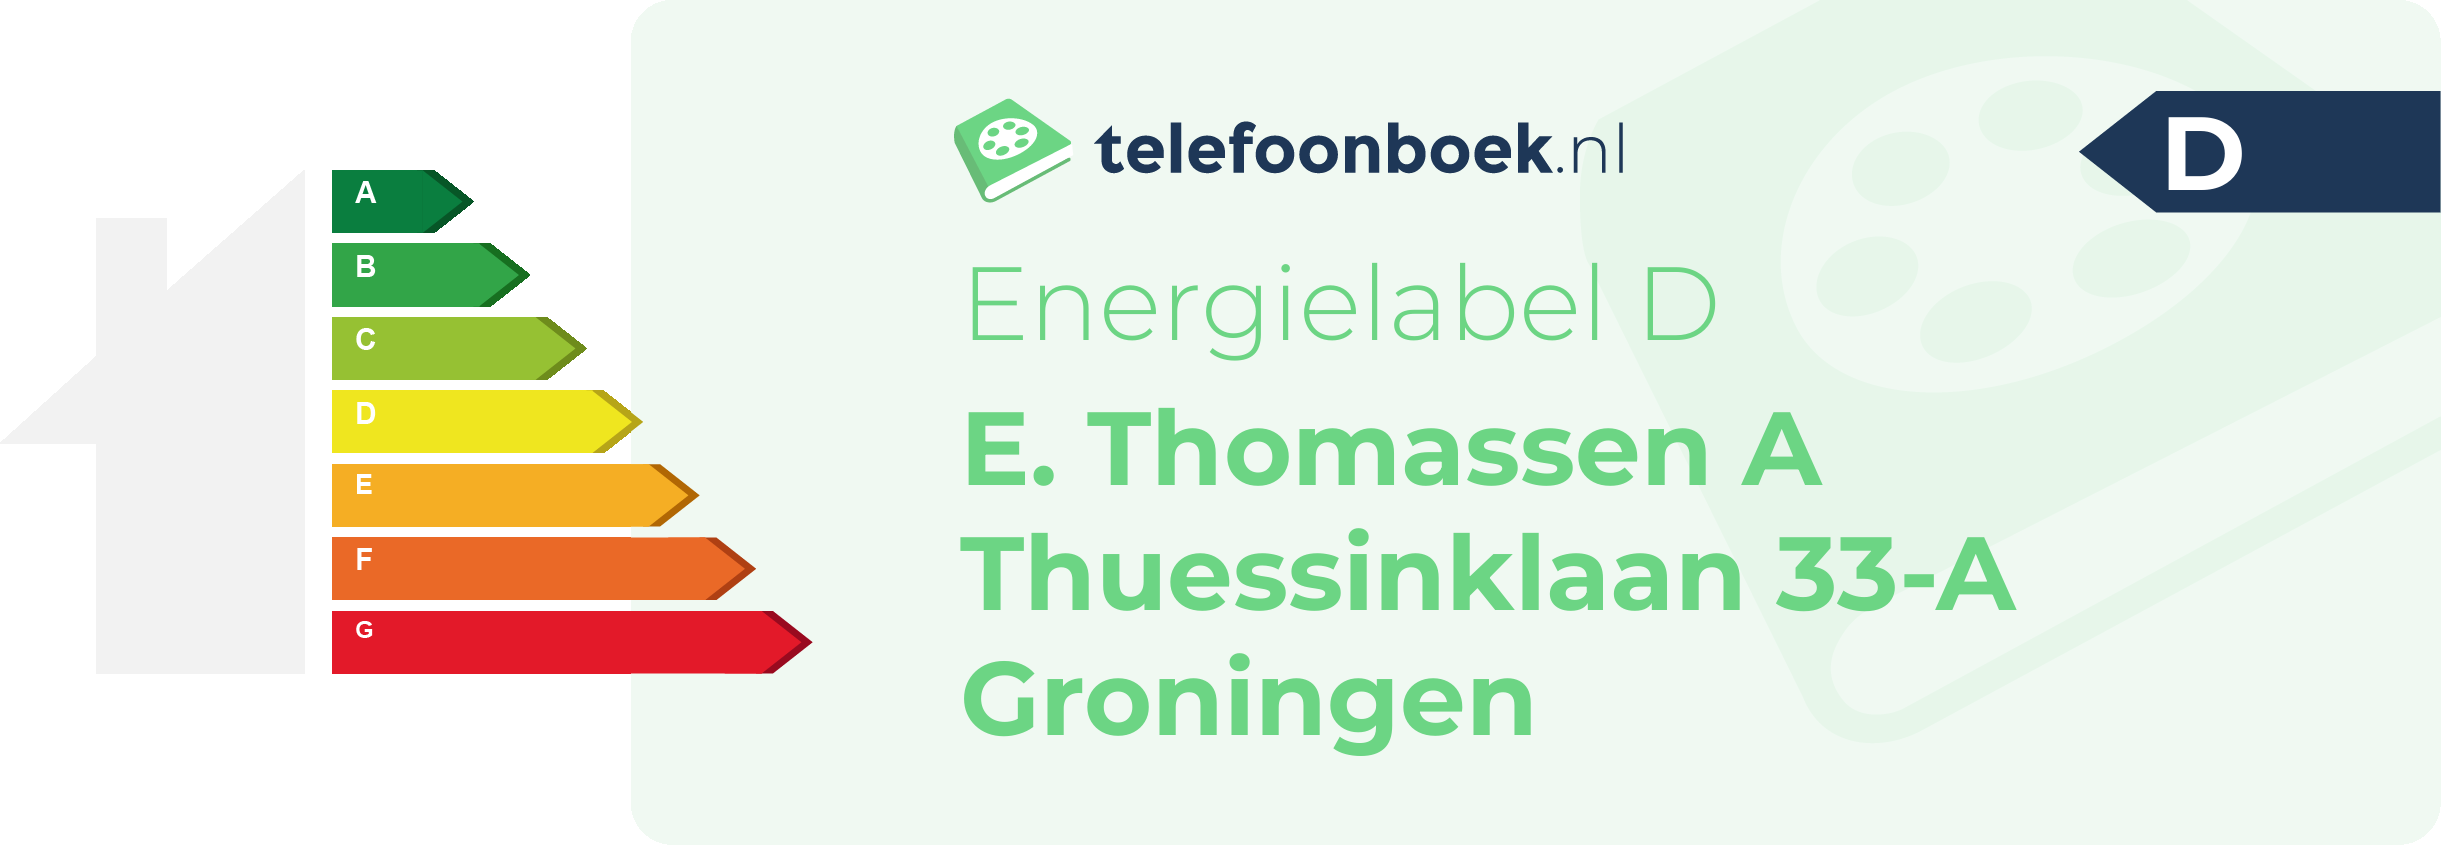 Energielabel E. Thomassen A Thuessinklaan 33-A Groningen